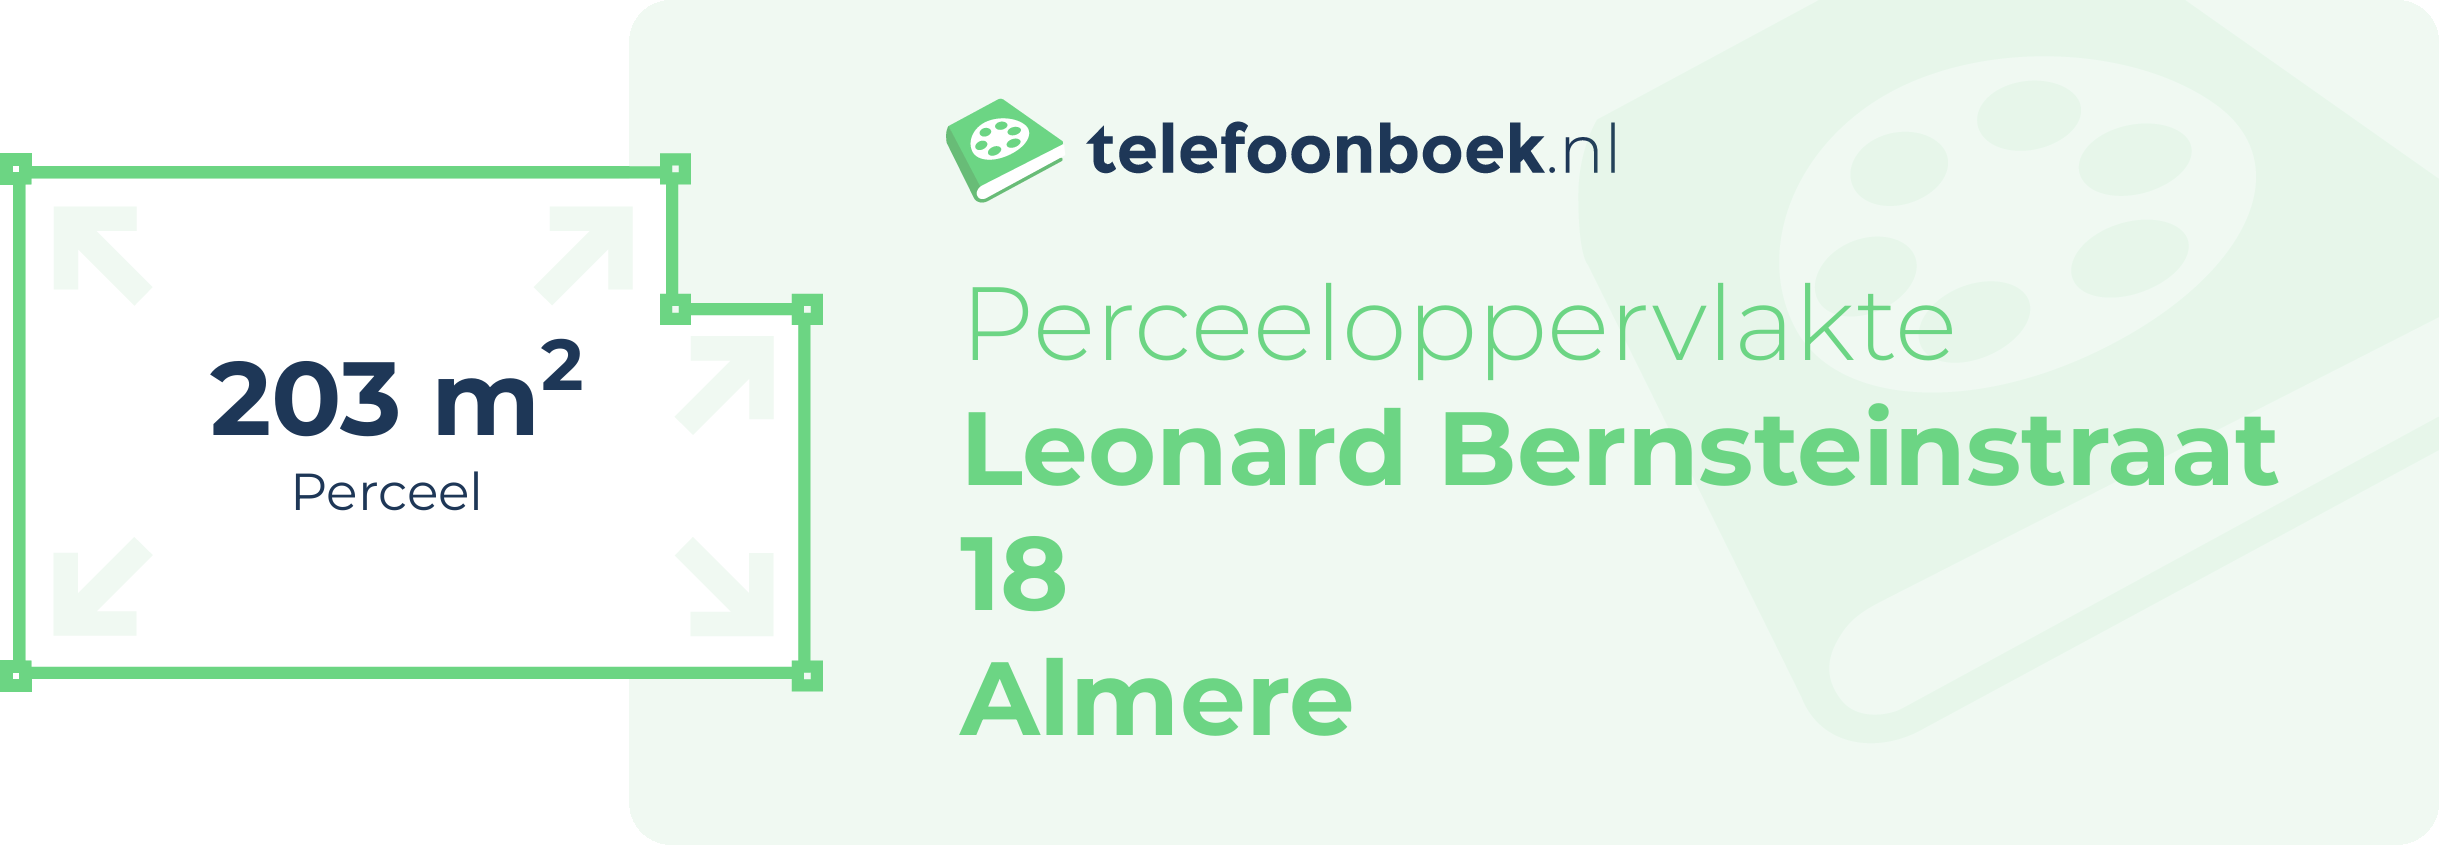 Perceeloppervlakte Leonard Bernsteinstraat 18 Almere